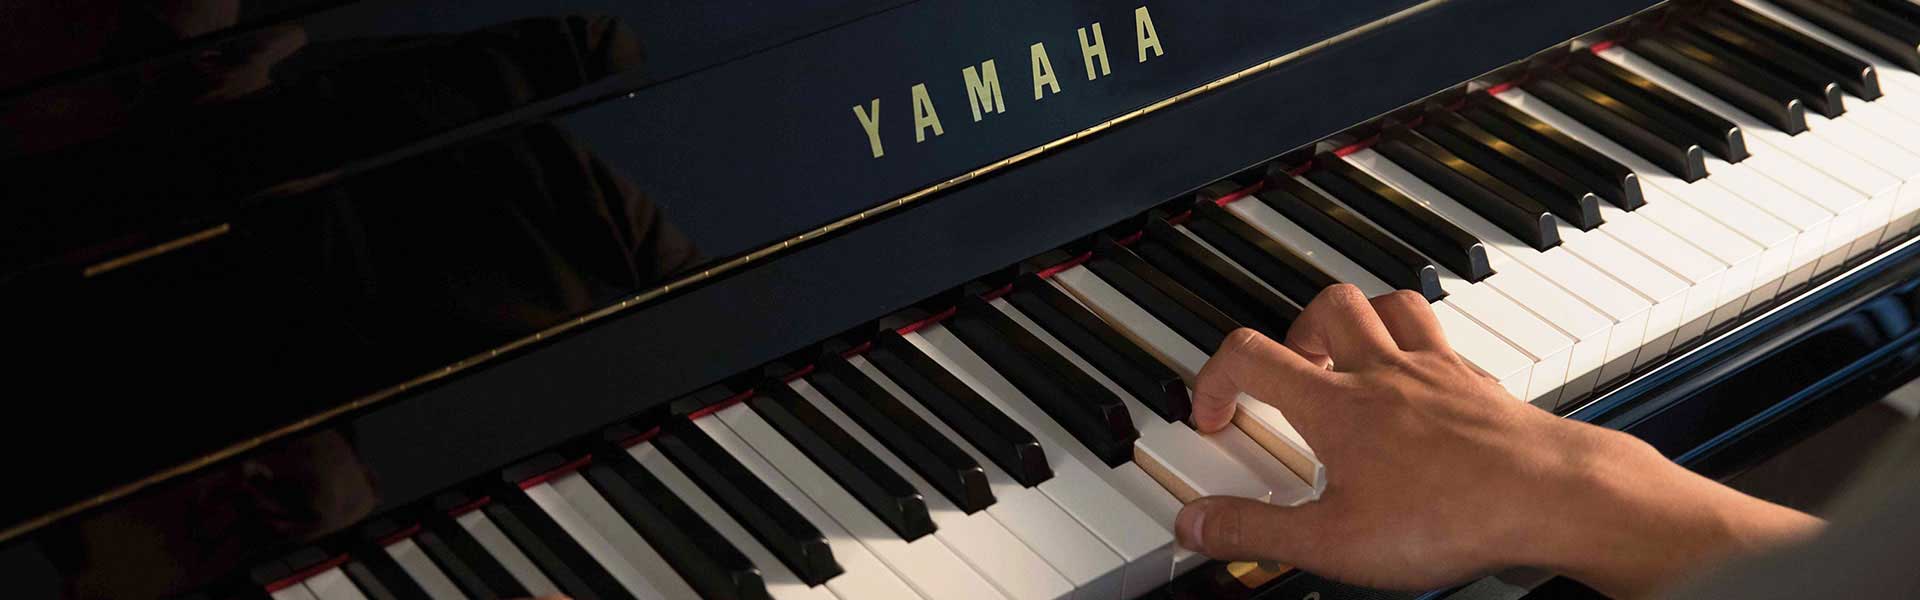 Yamaha Pianos at Riverton Piano Company